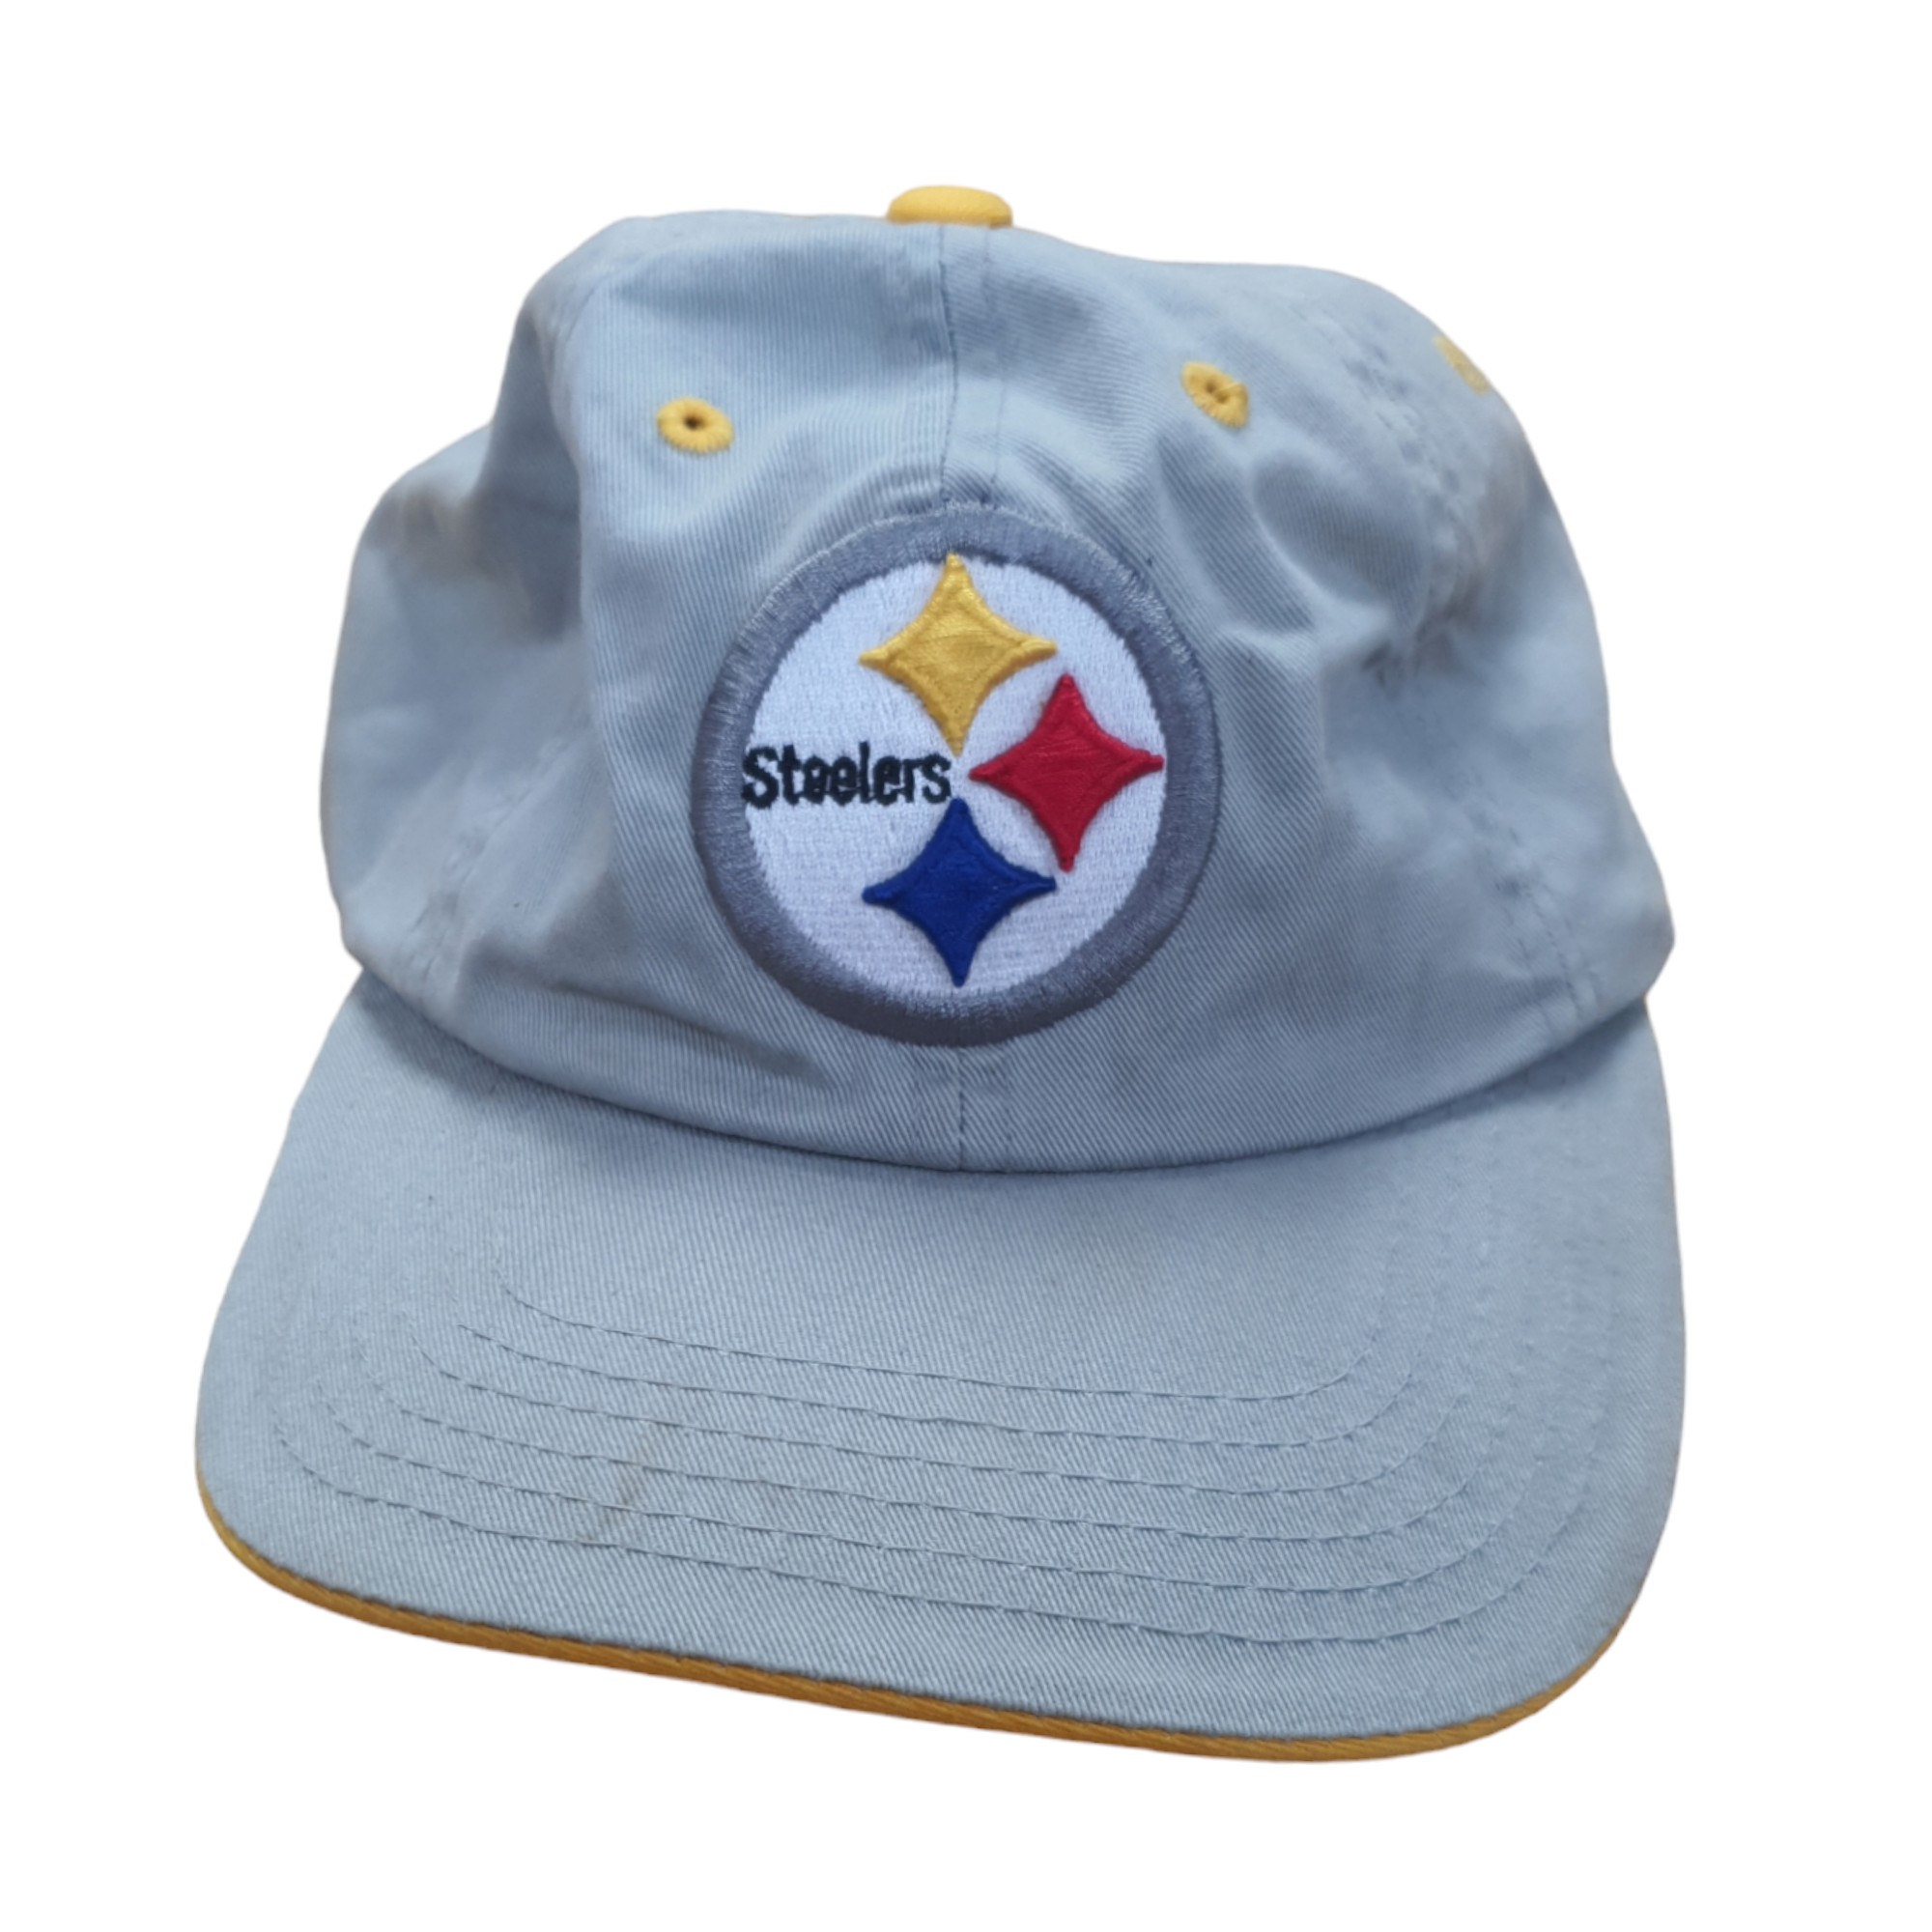 NFL Steelers Cap